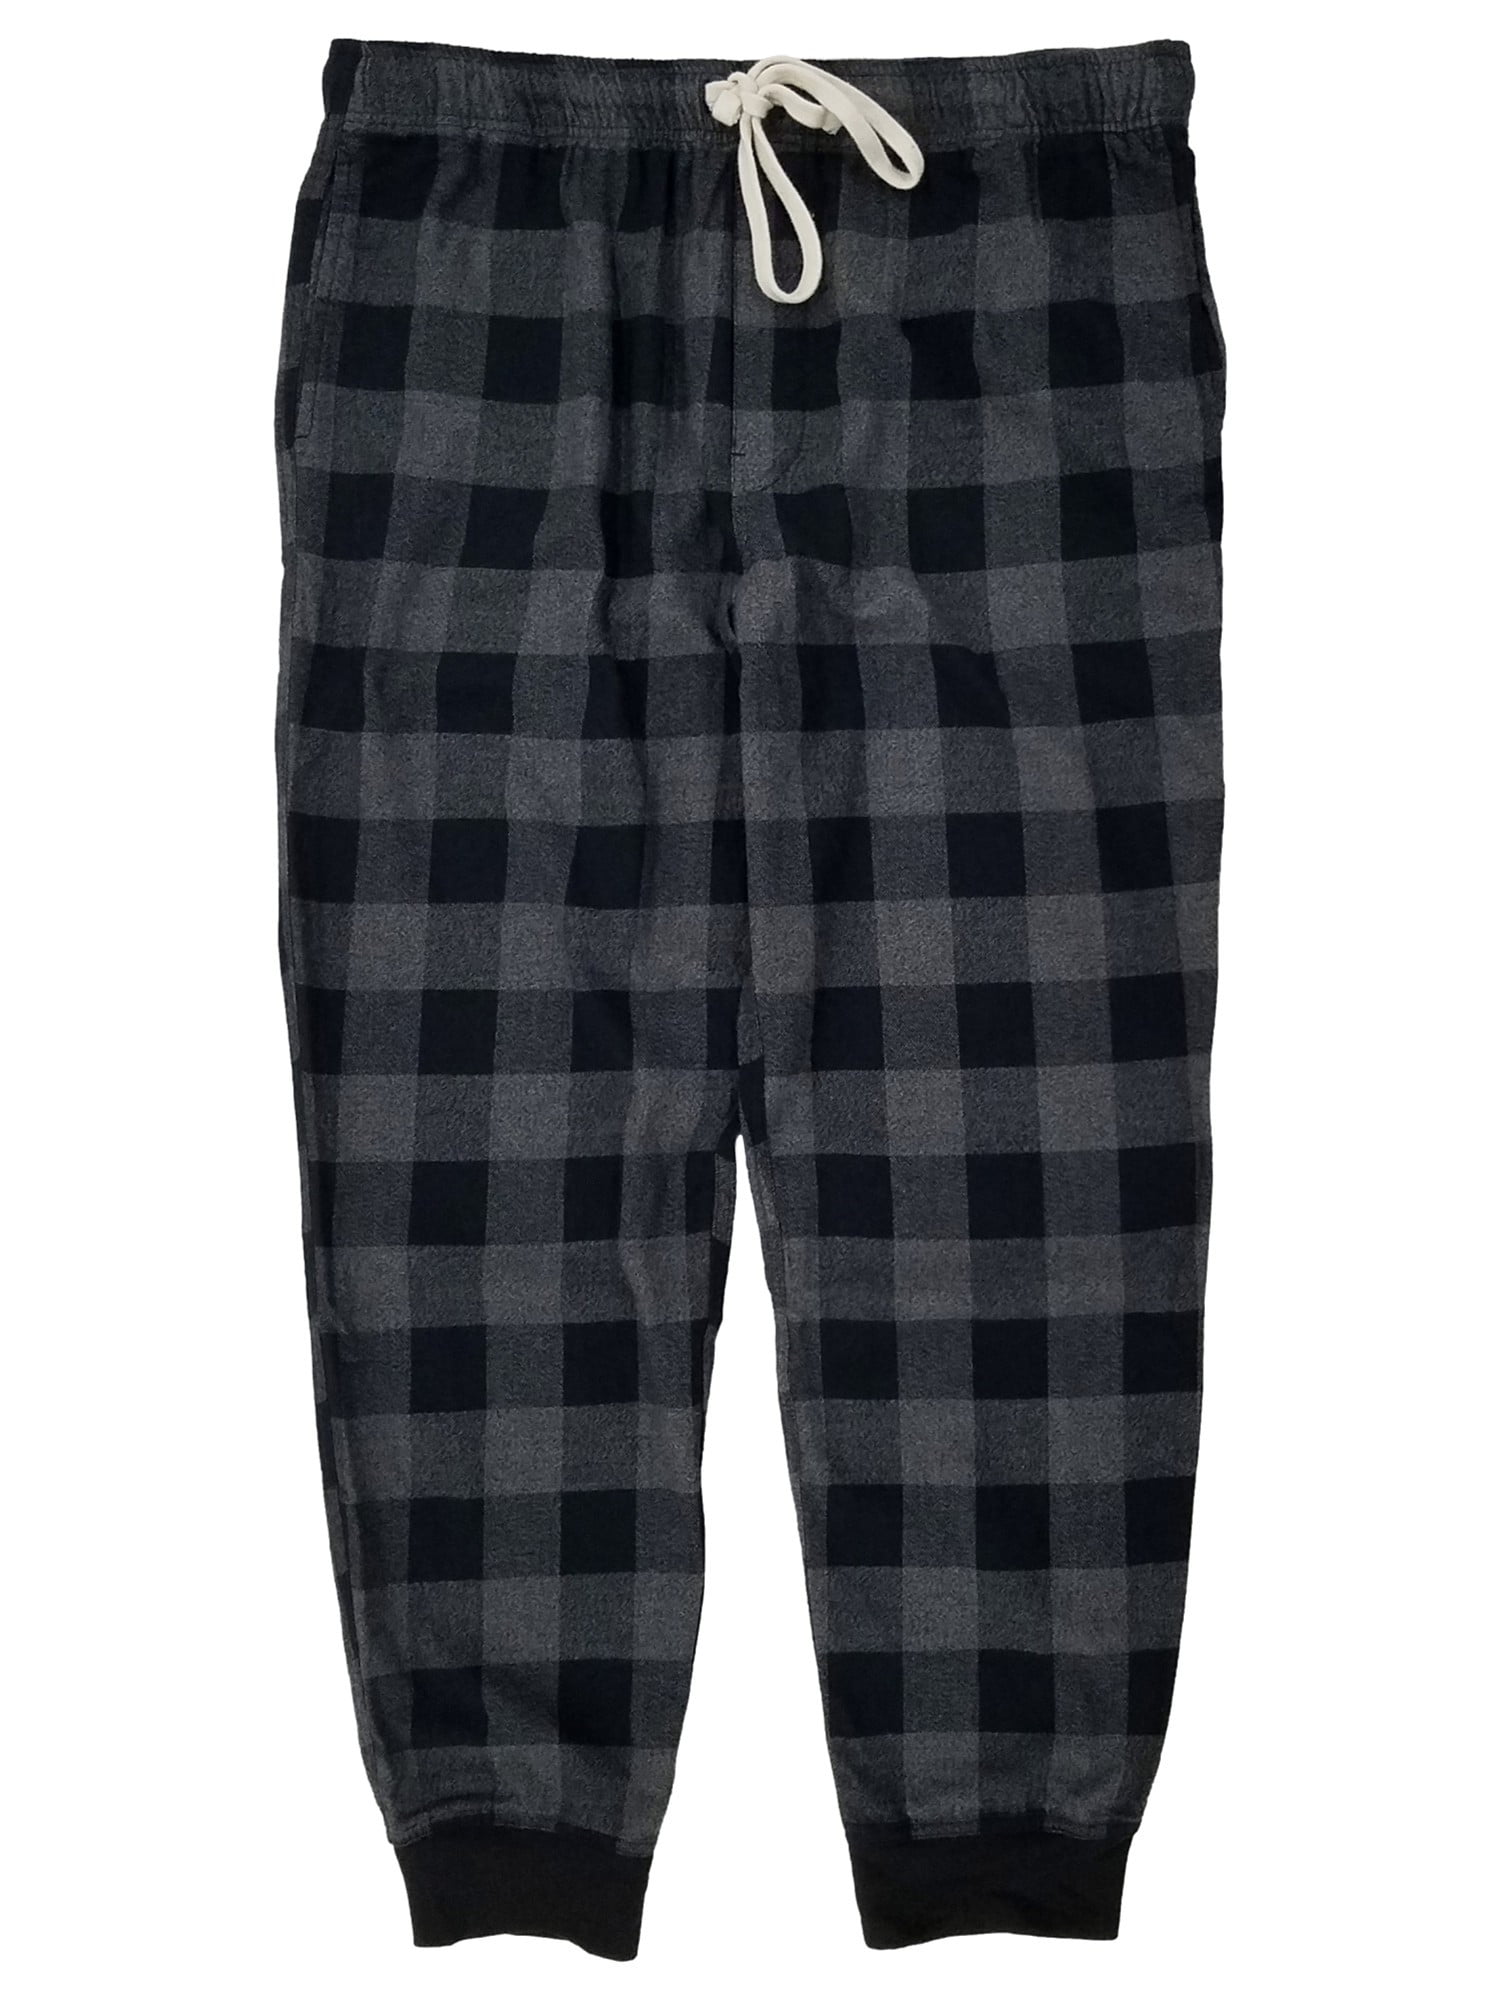 Mens Red & Black Buffalo Plaid Flannel Jogger Sleep Pants Pajama Bottoms XXL